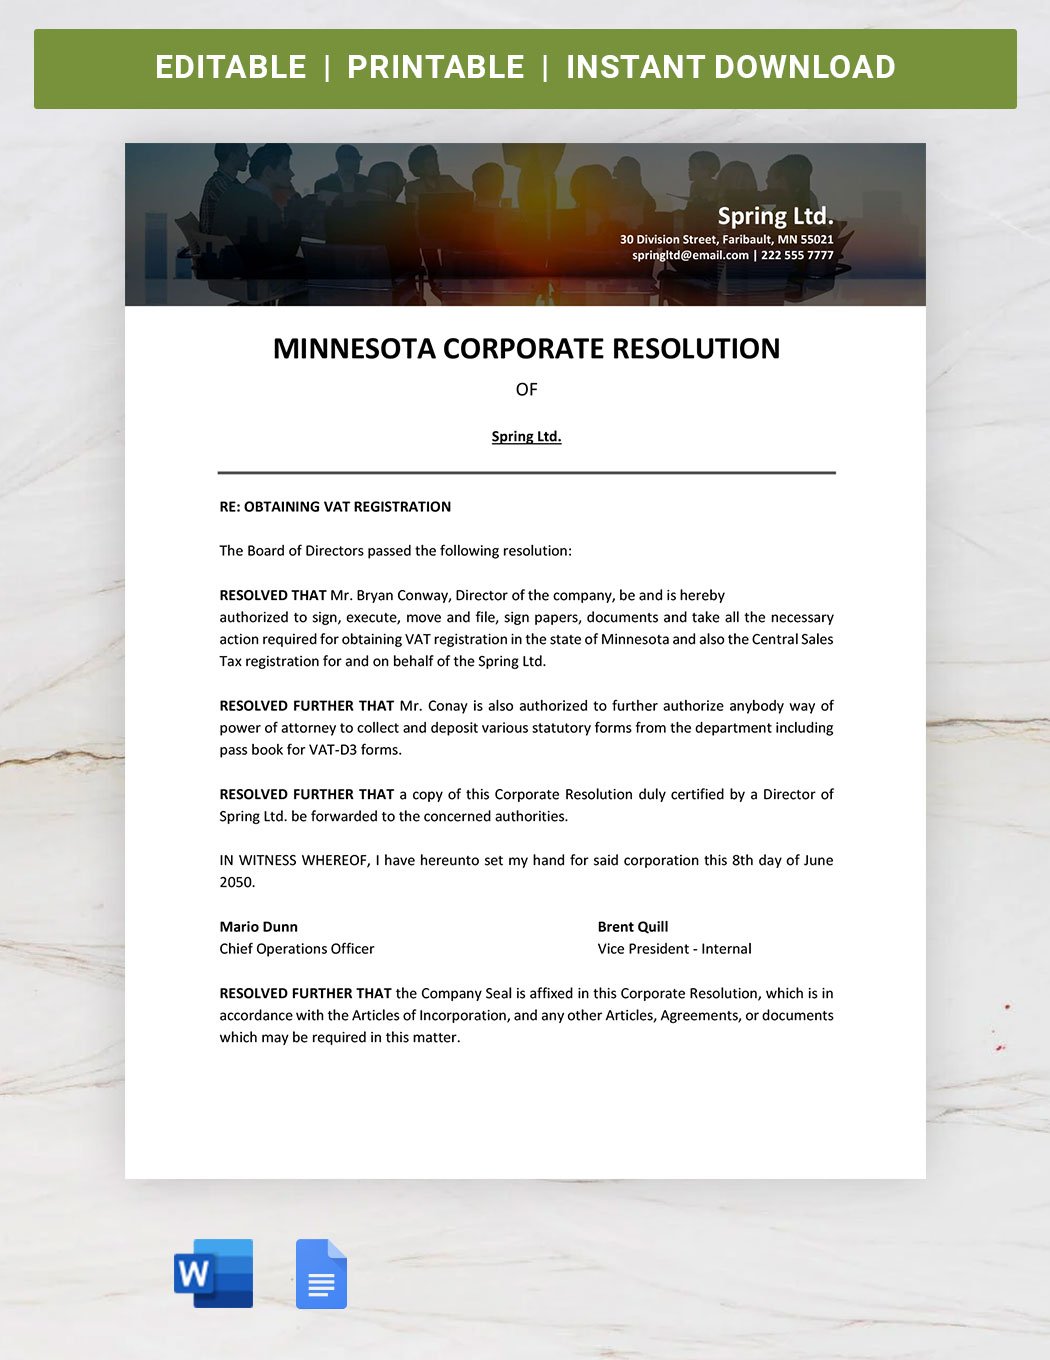 Minnesota Corporate Resolution Template in Word, Google Docs